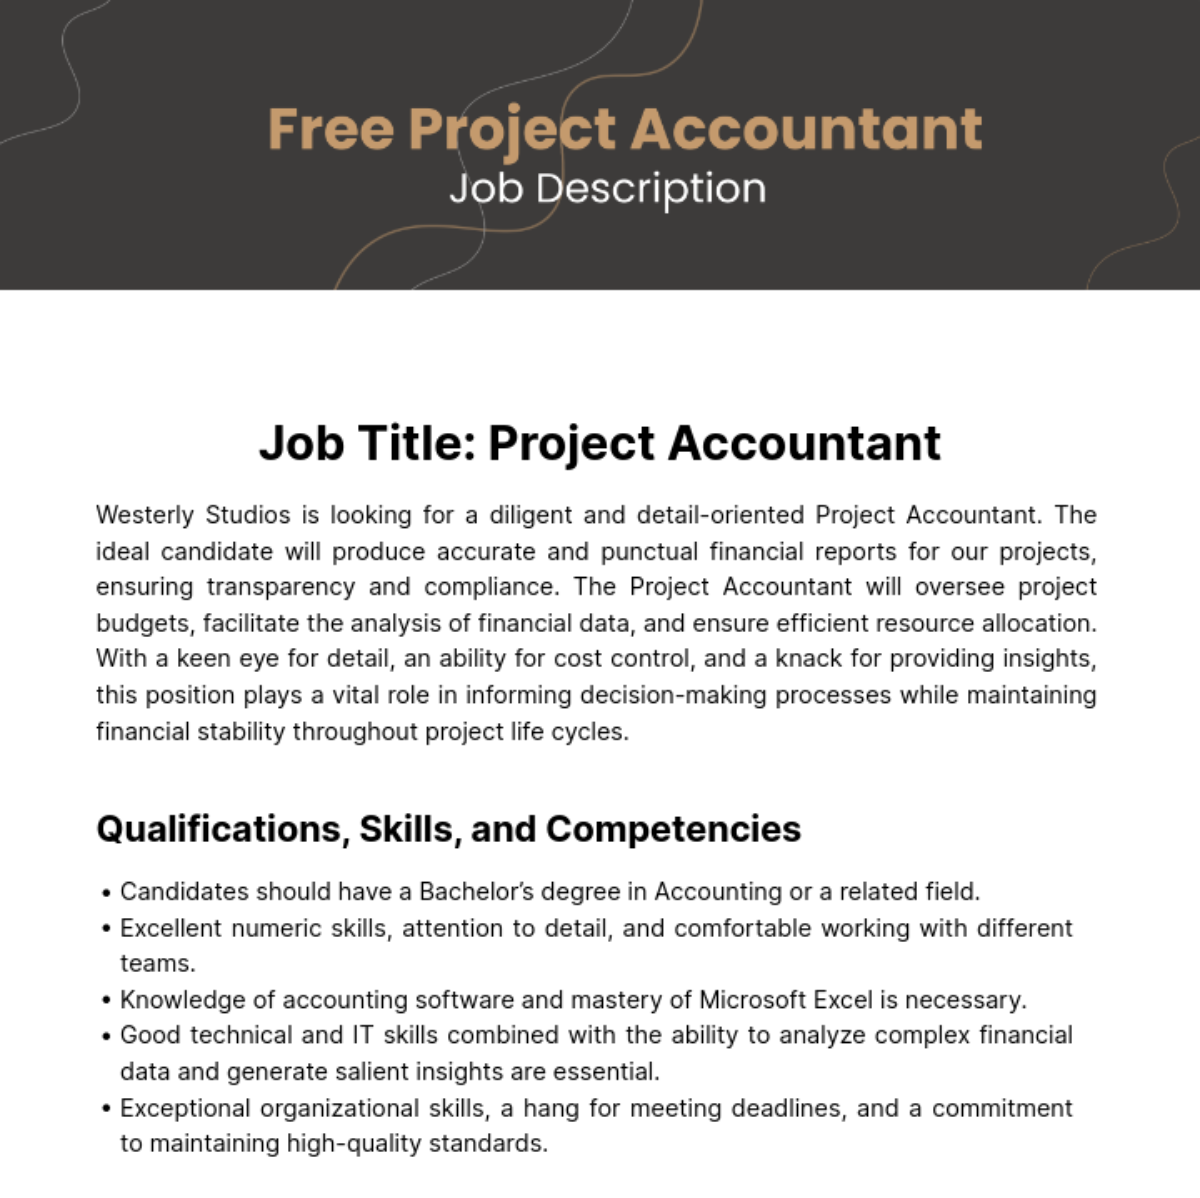 Free Project Accountant Job Description Template